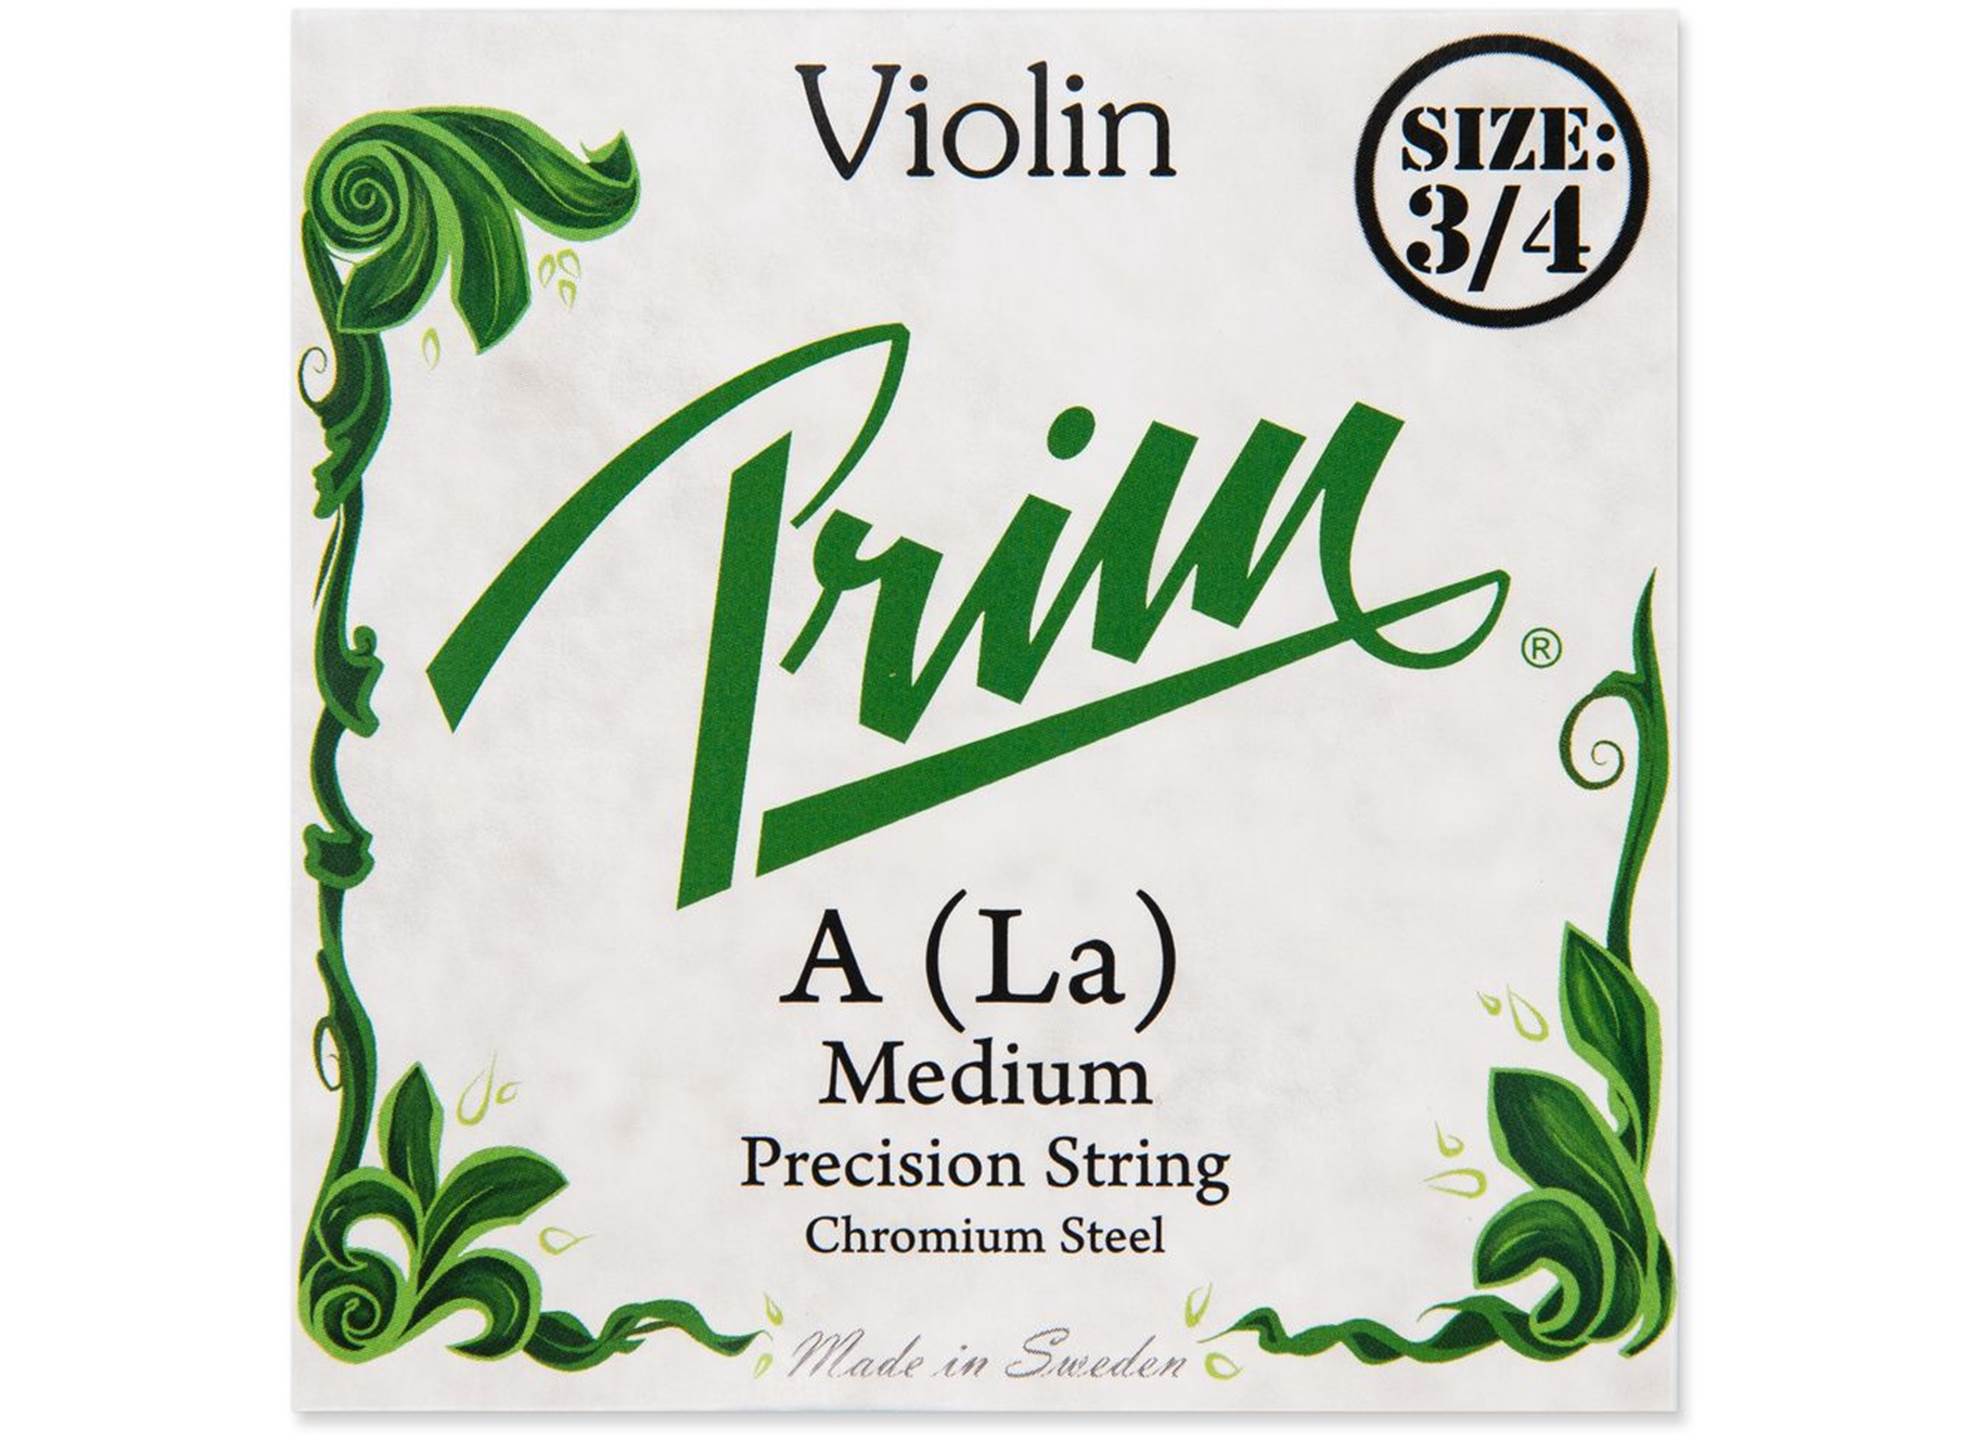 Violin 3/4 A